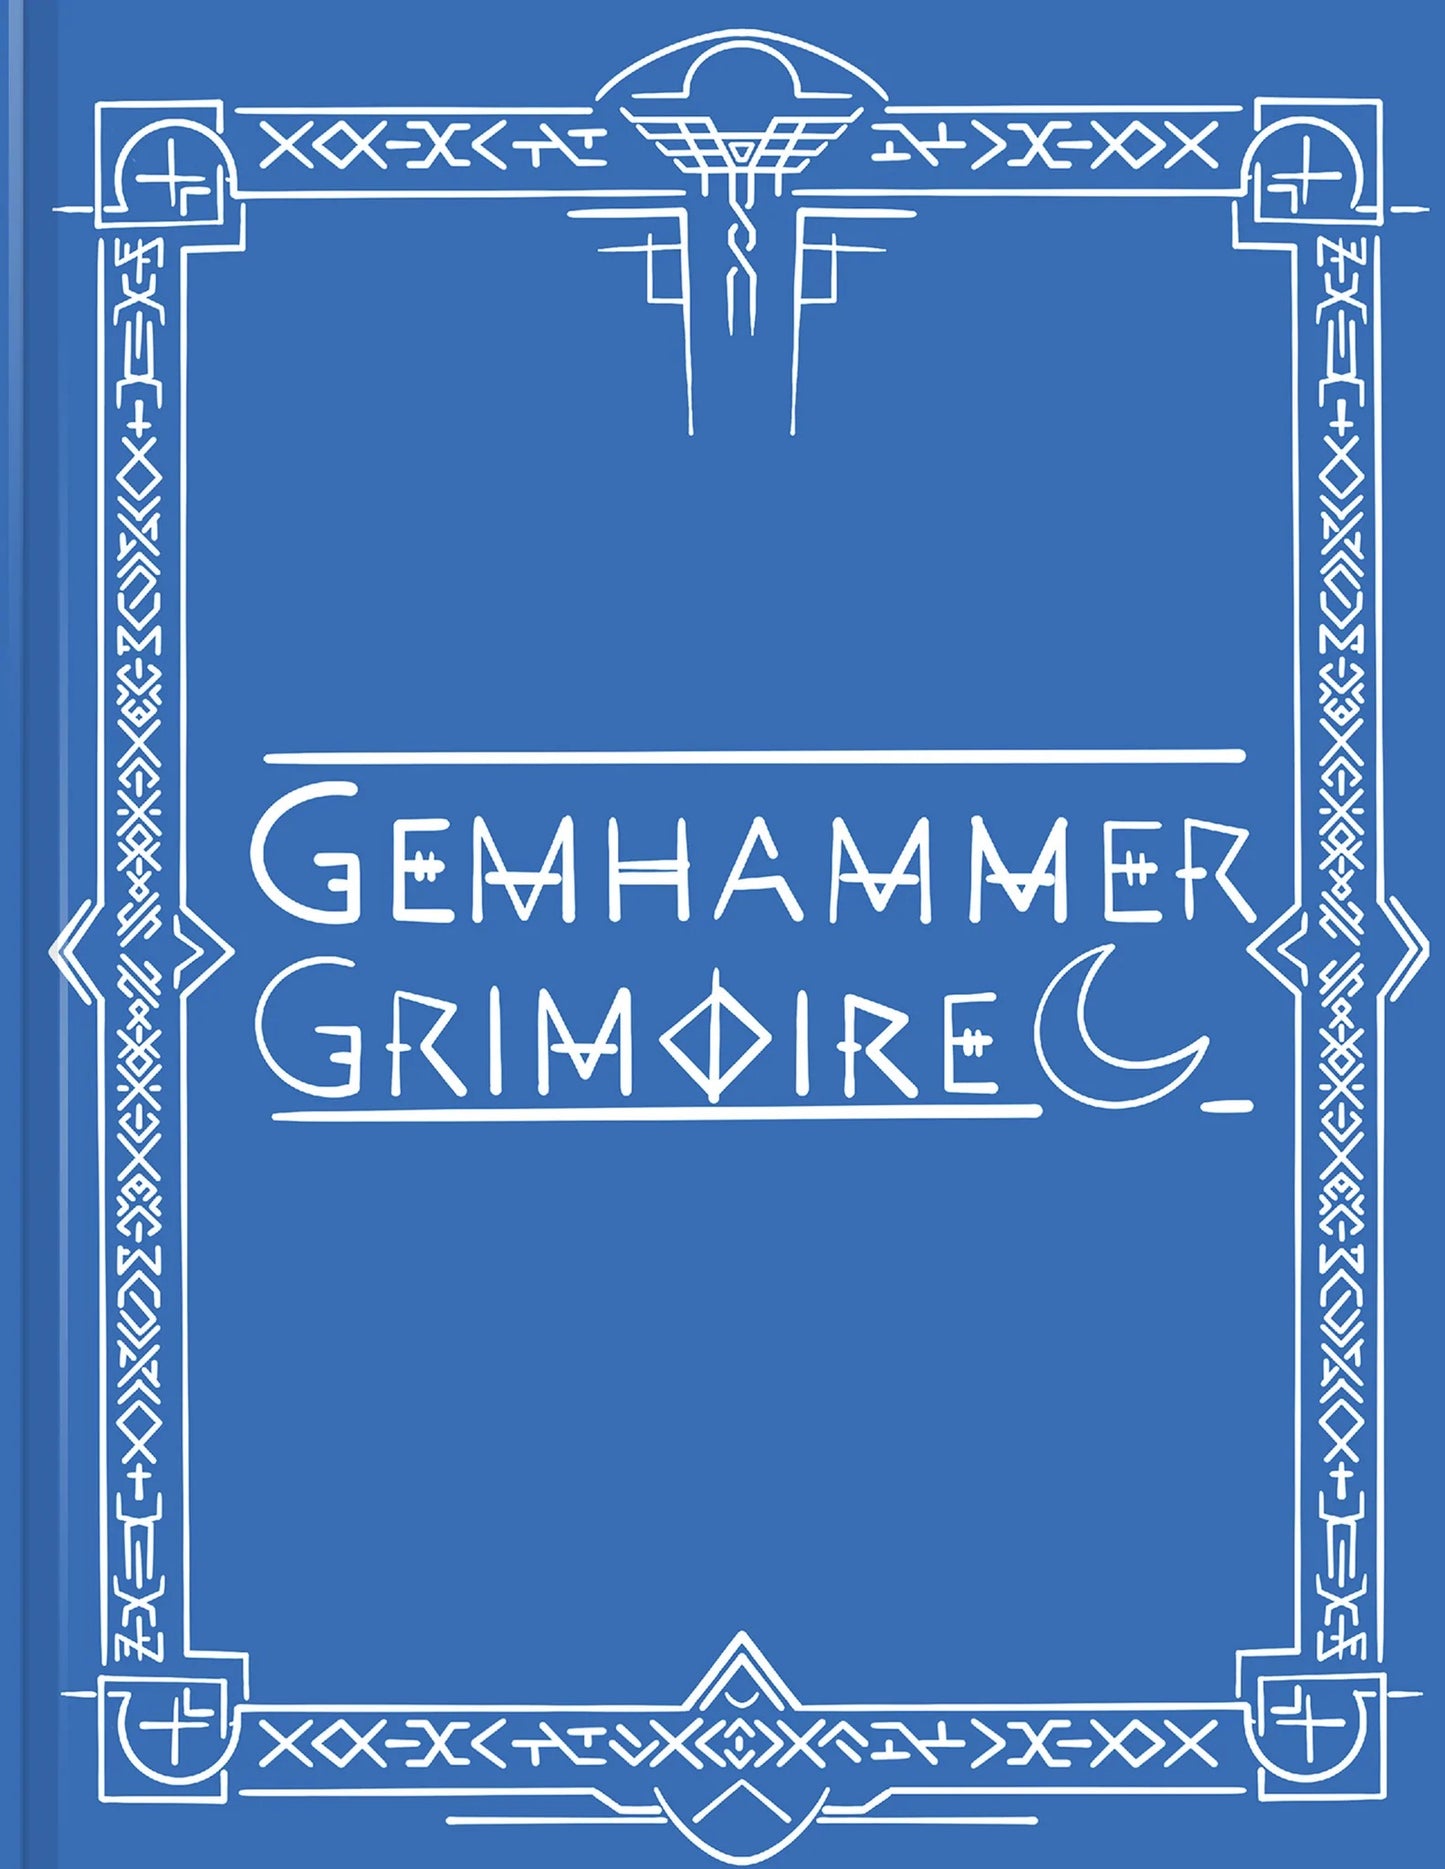 The Gemhammer Grimoire